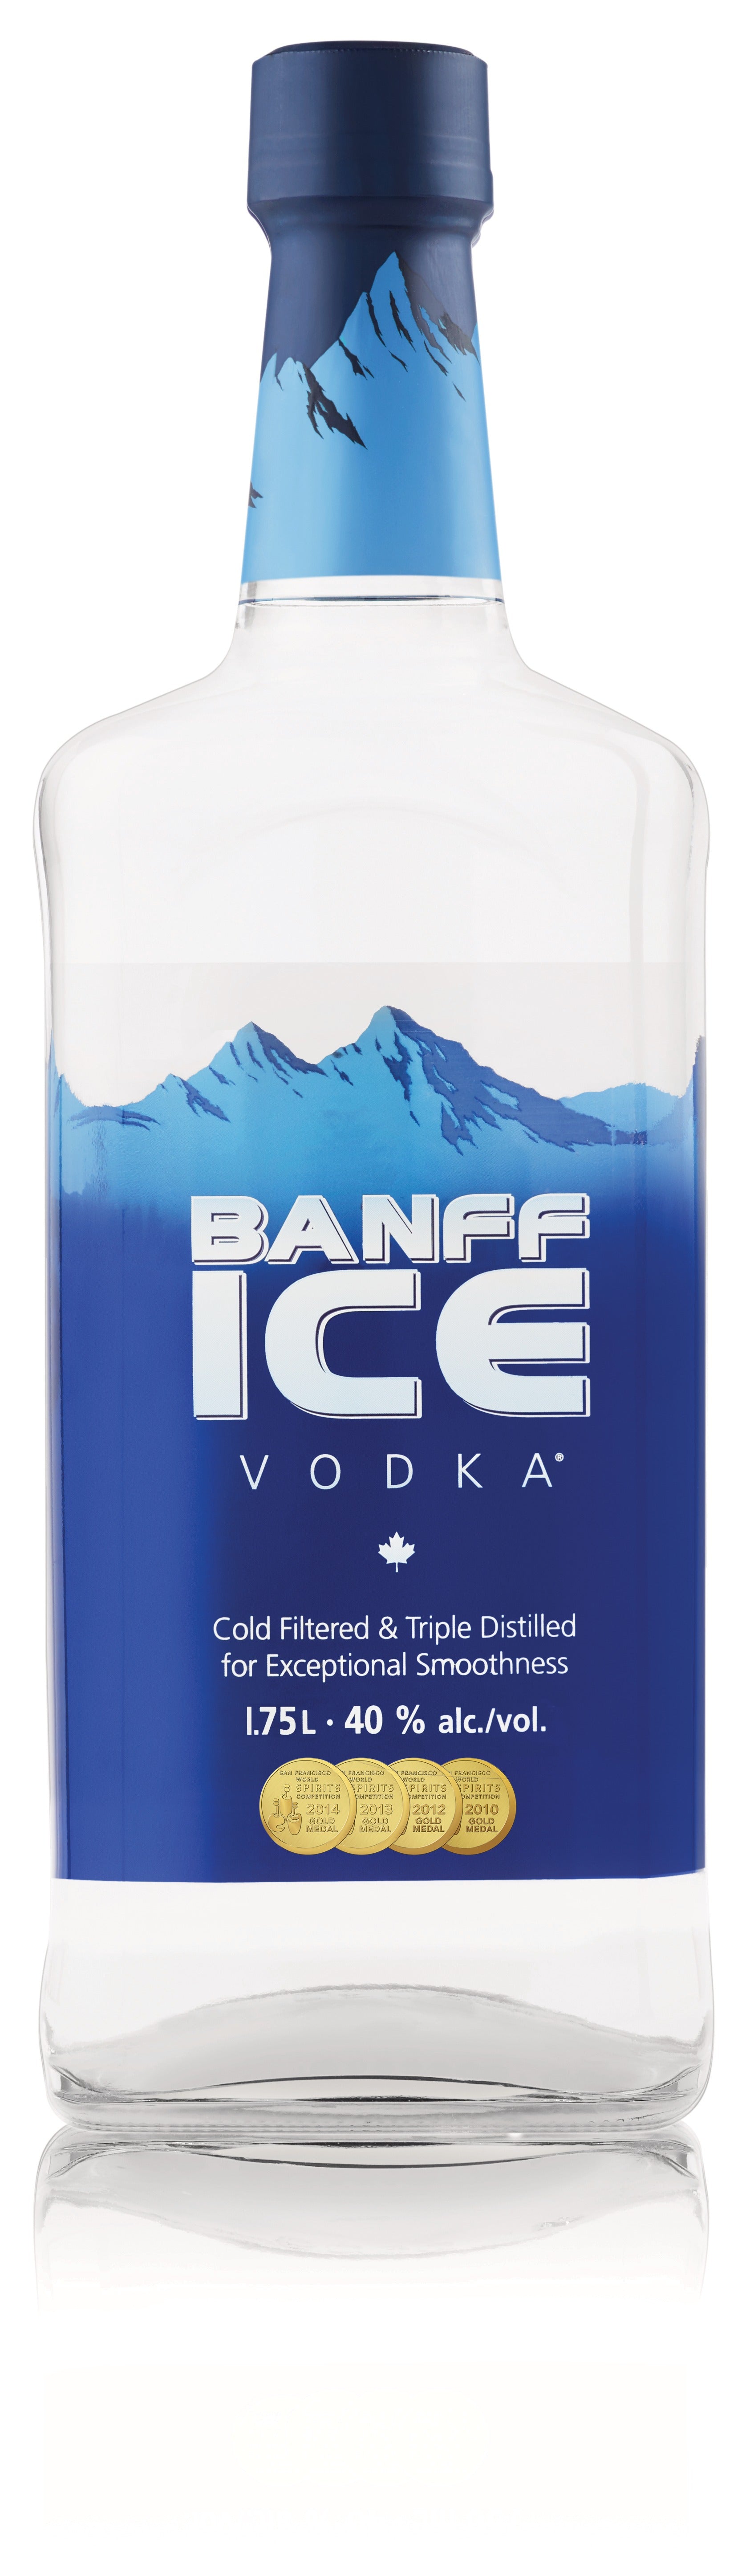 BANFF ICE VODKA 1.75L